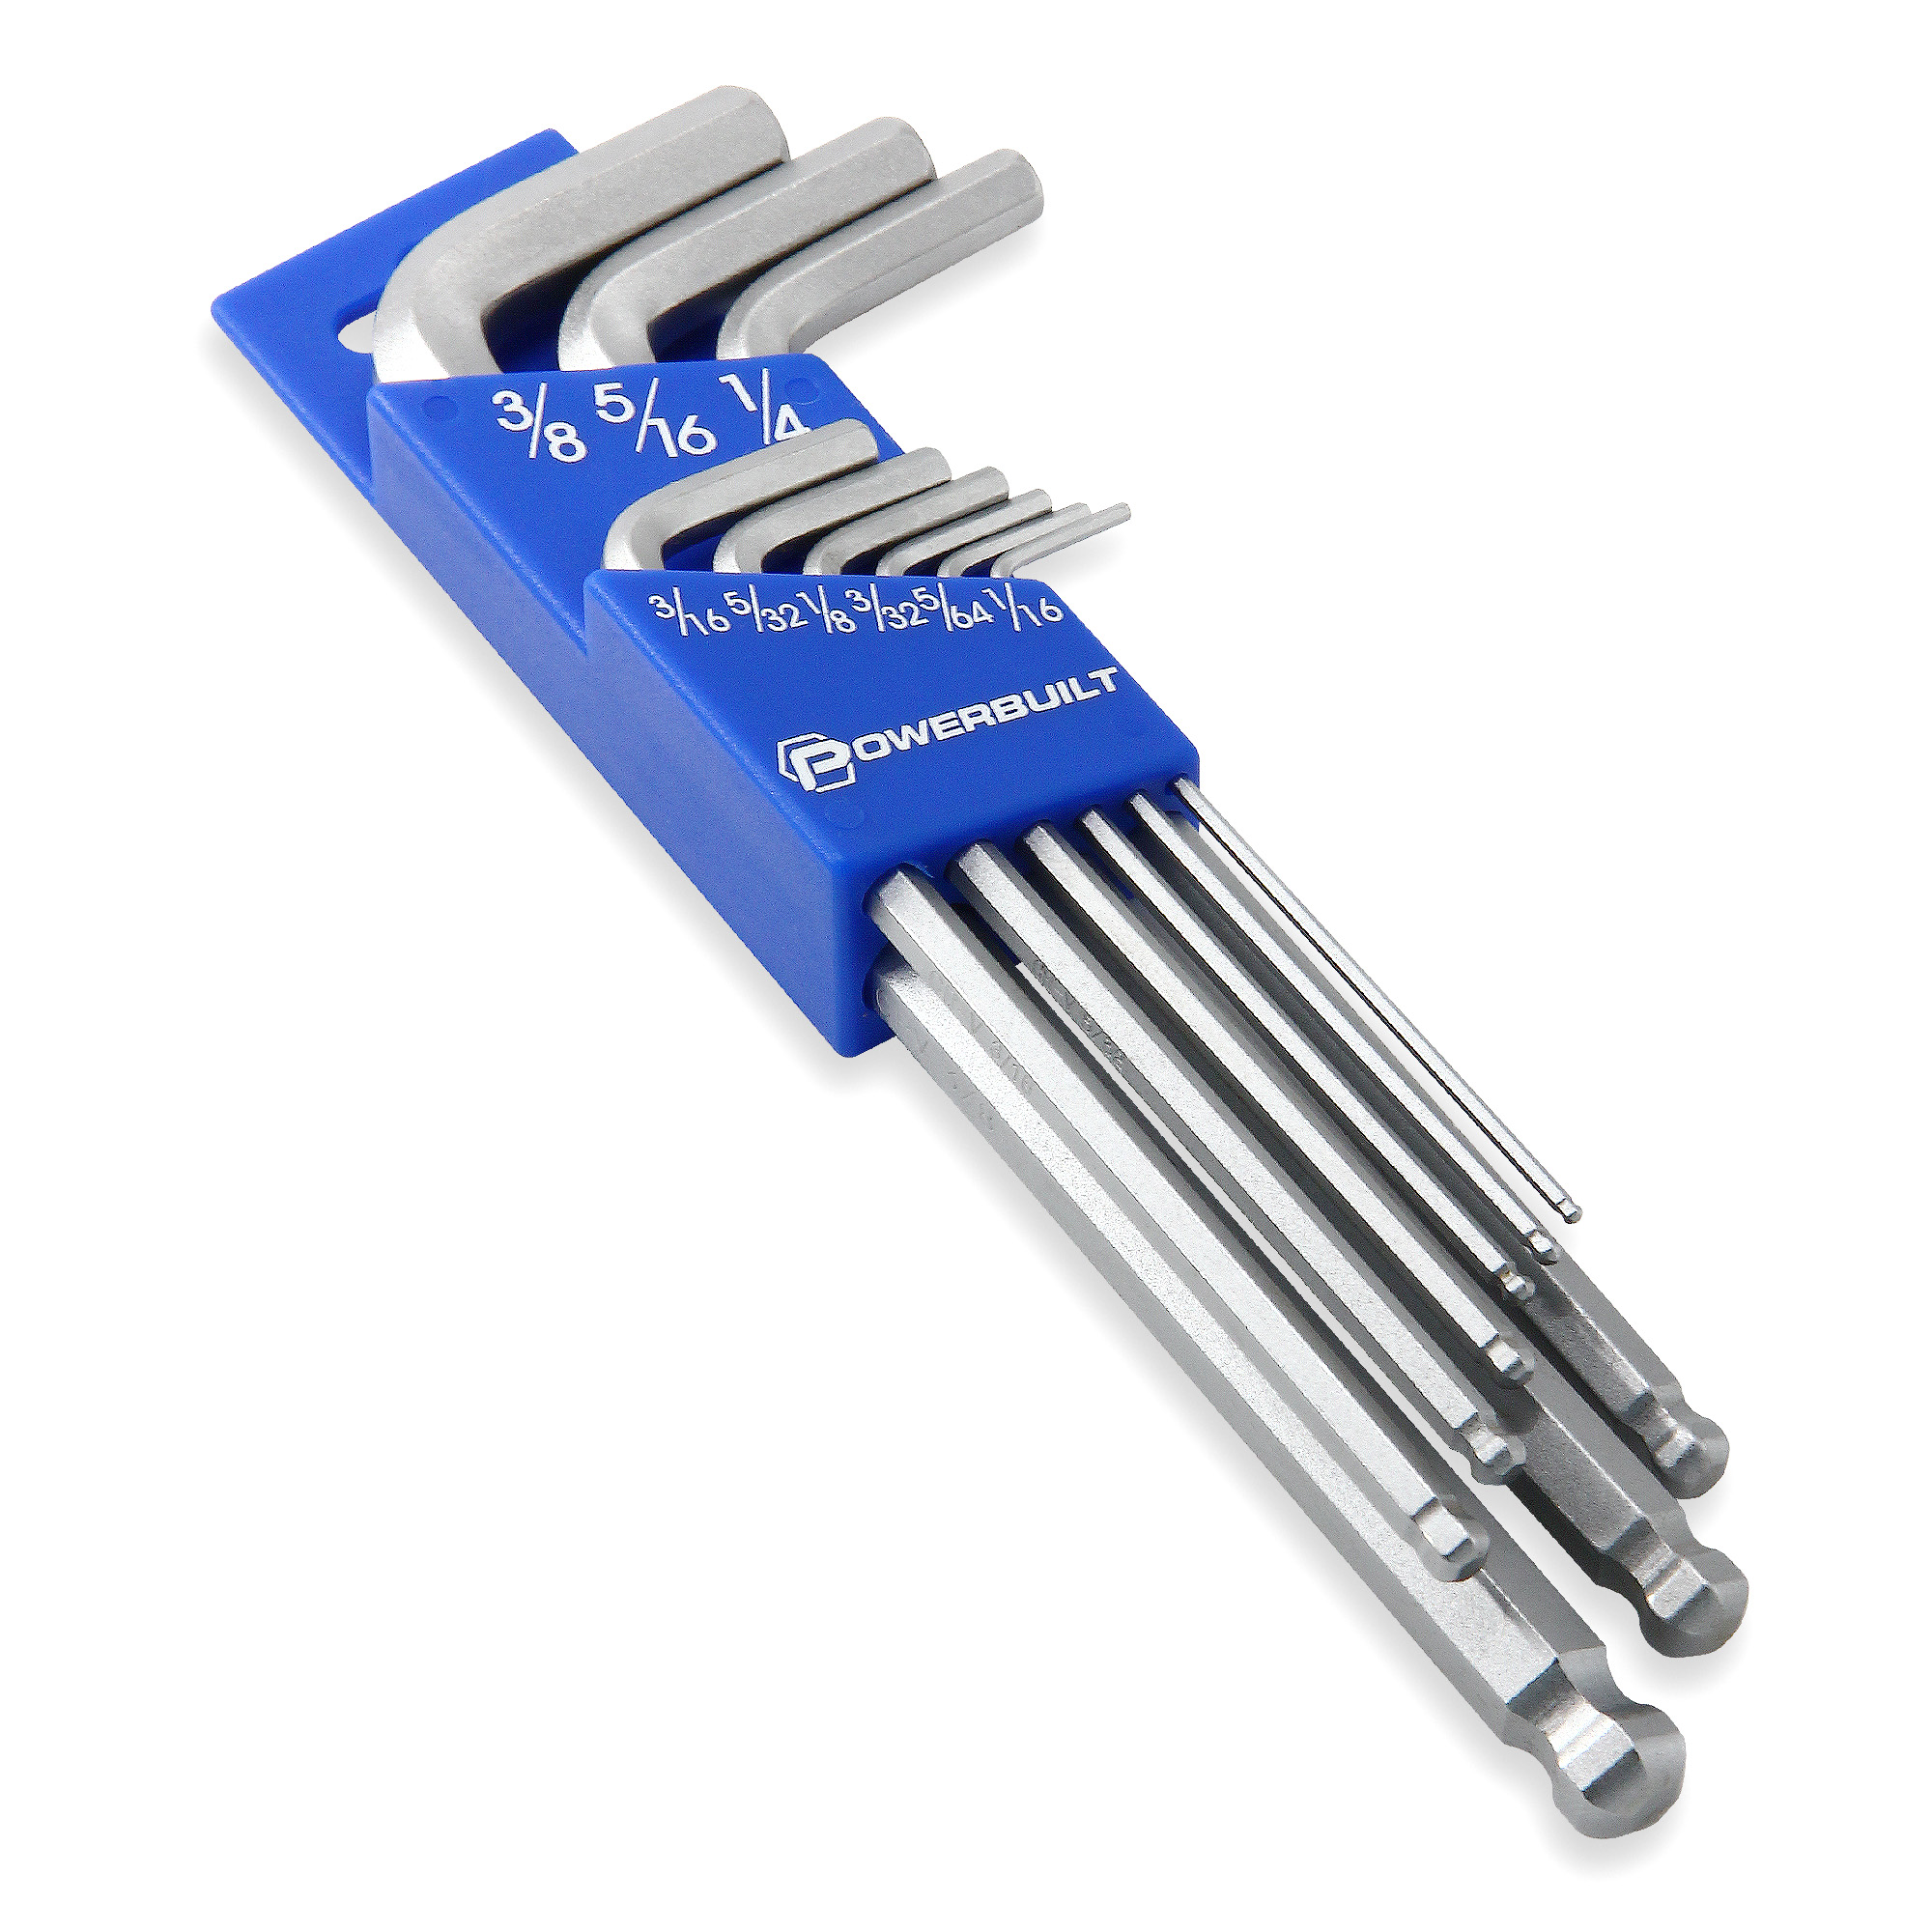 Powerbuilt 9 Piece SAE Long Arm Hex Key Wrench Set - 640081